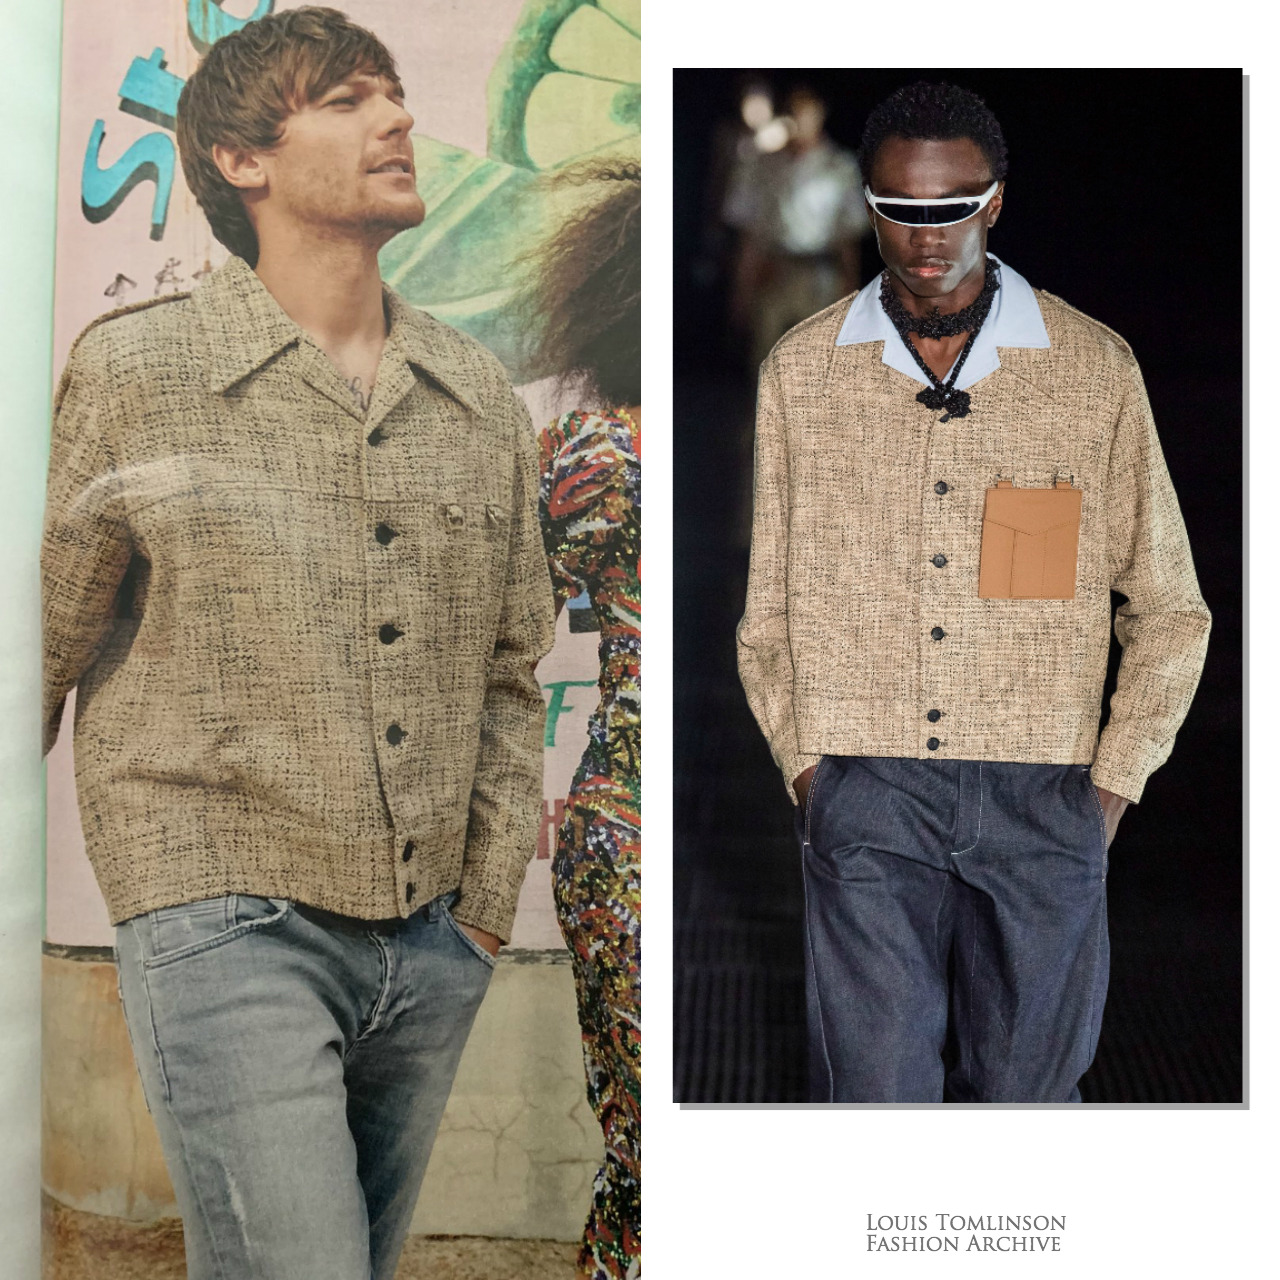 Louis Tomlinson Fashion Archive on X: 11/9/18